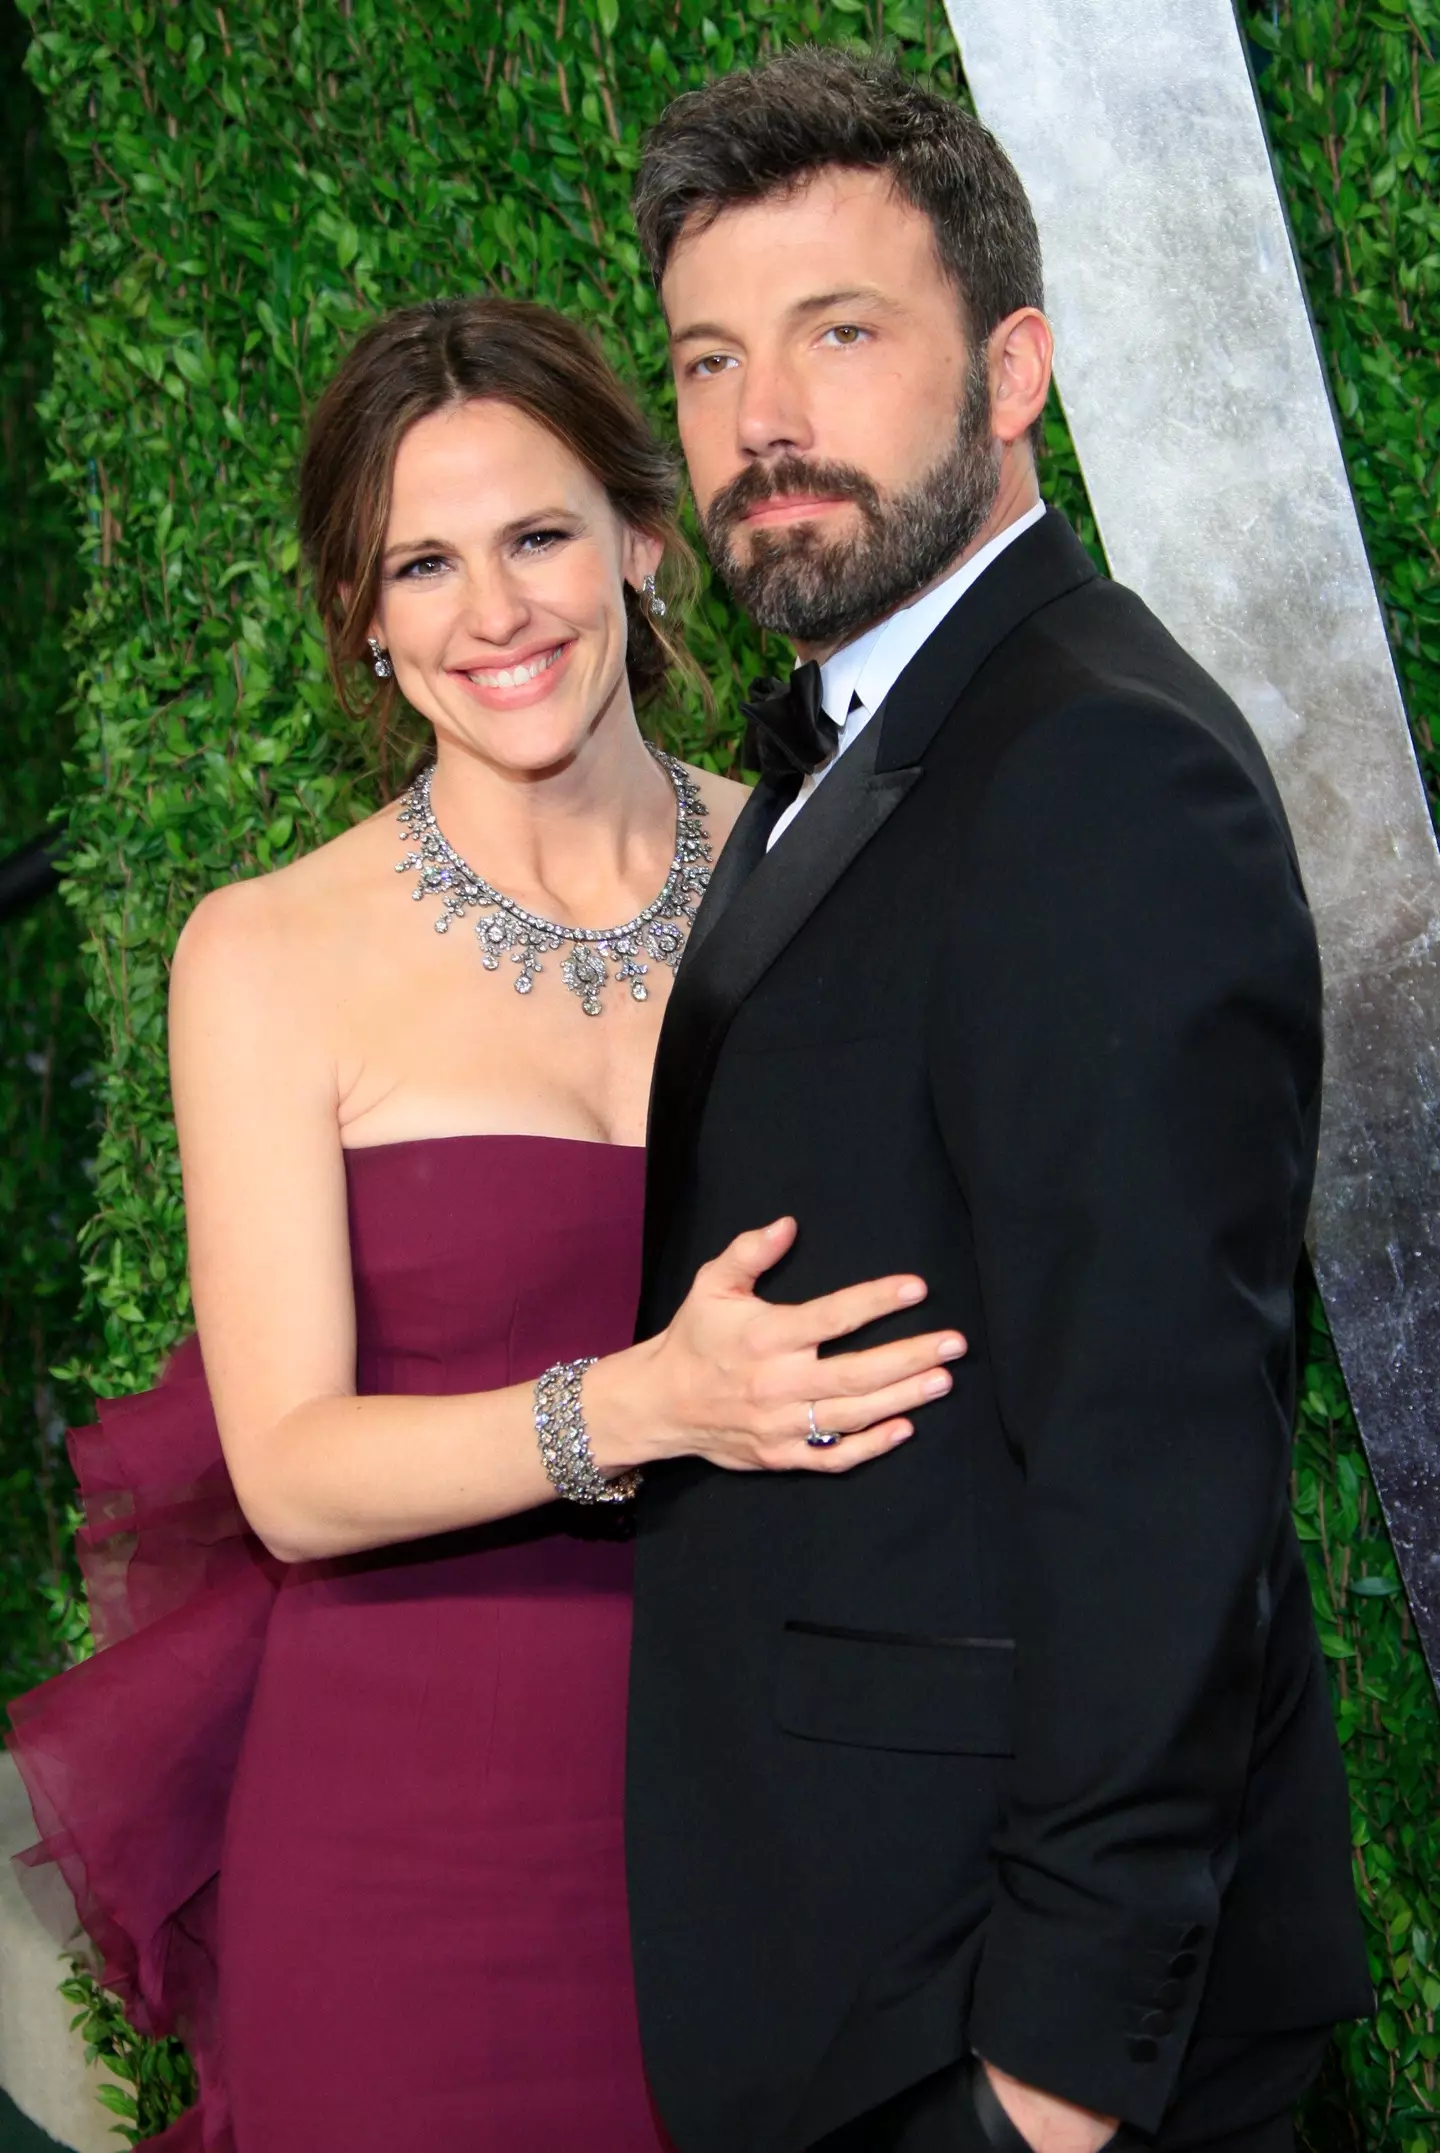 Ben was married to actor Jennifer Garner for 13 years.